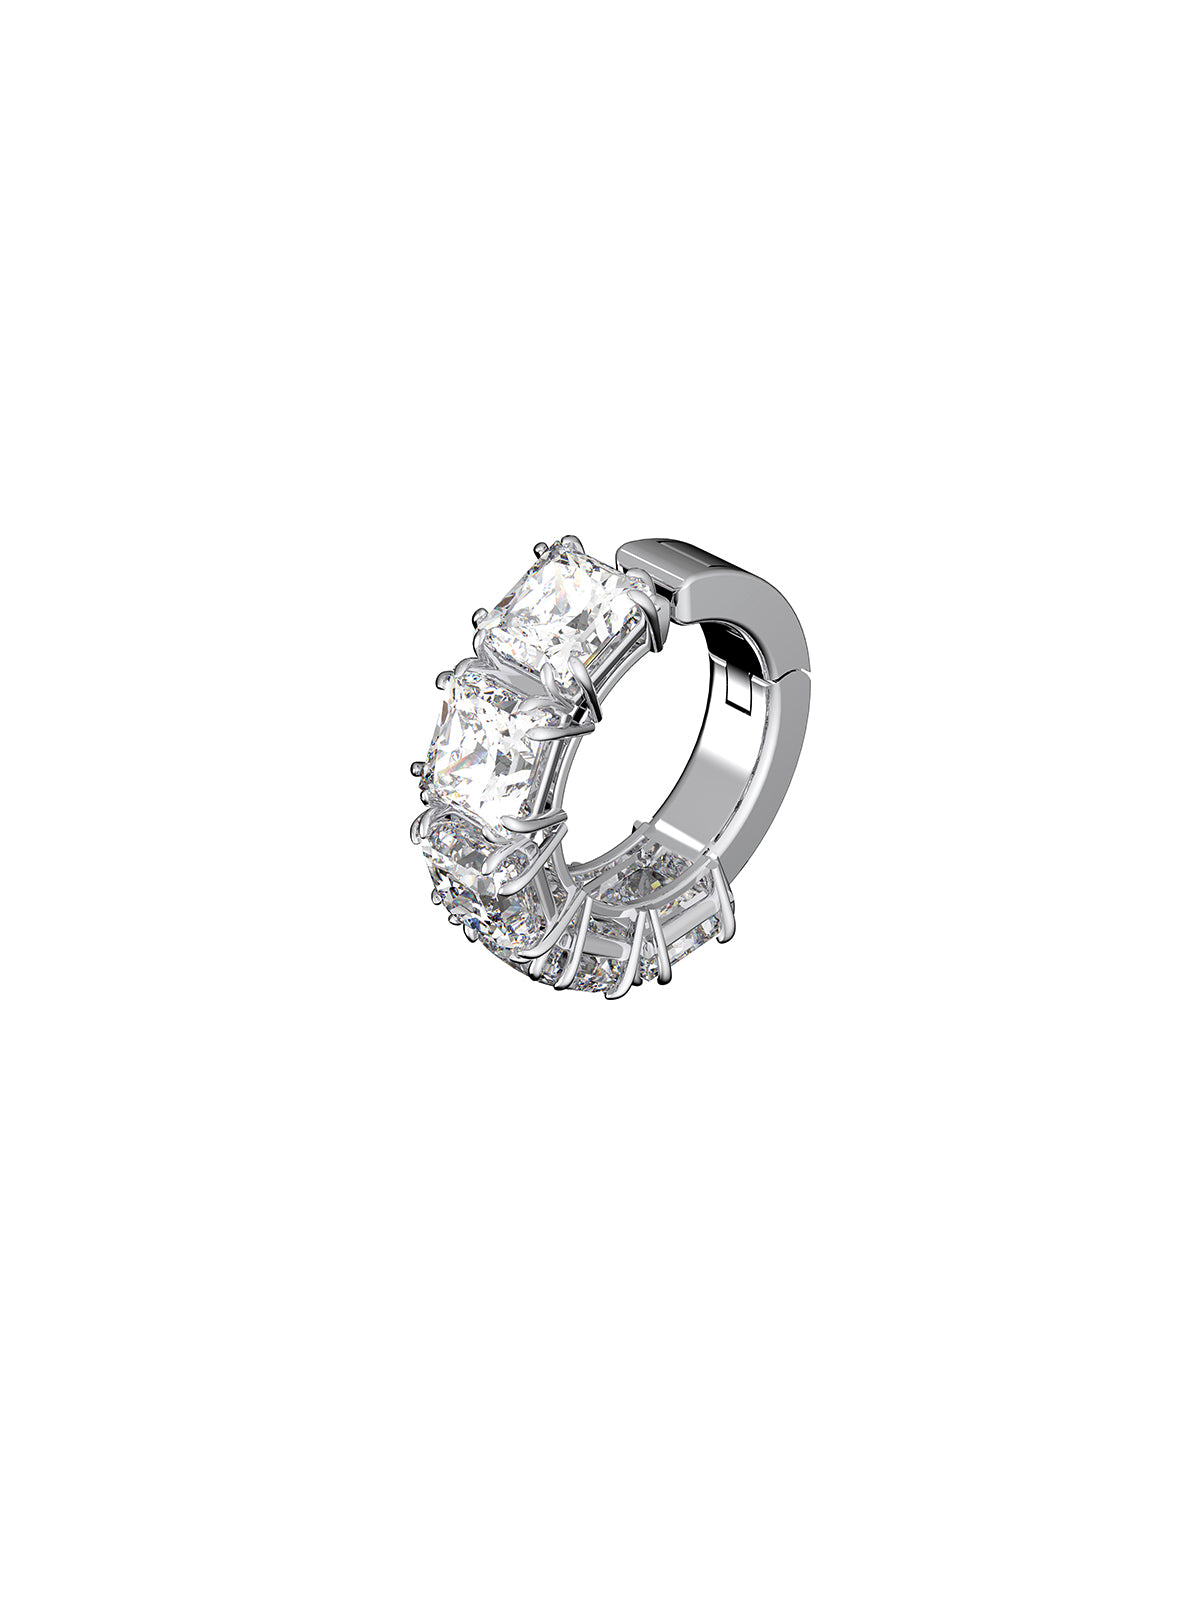 SALE Swarovski Millenia White Crystal Ear Cuff 5613641